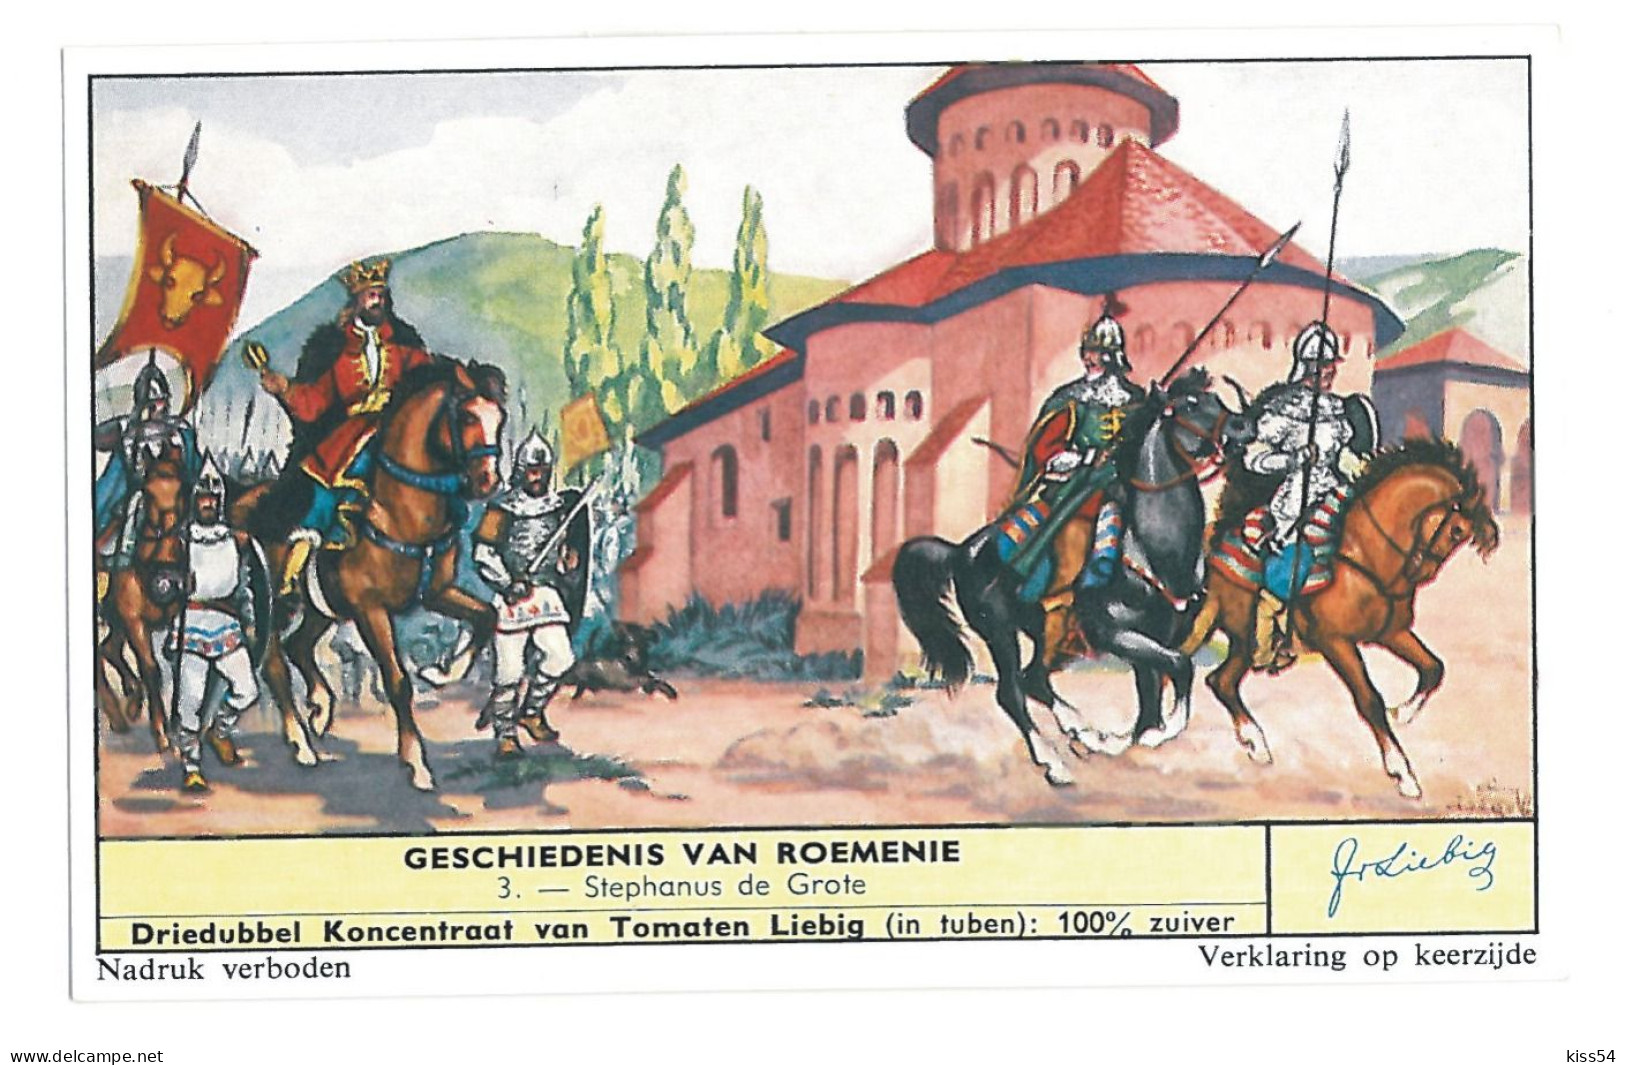 RO 91 - 13937 Publicity, VORONET, STEFAN Cel MARE - Old Mini Postcard (11/7cm) - Unused - Roemenië